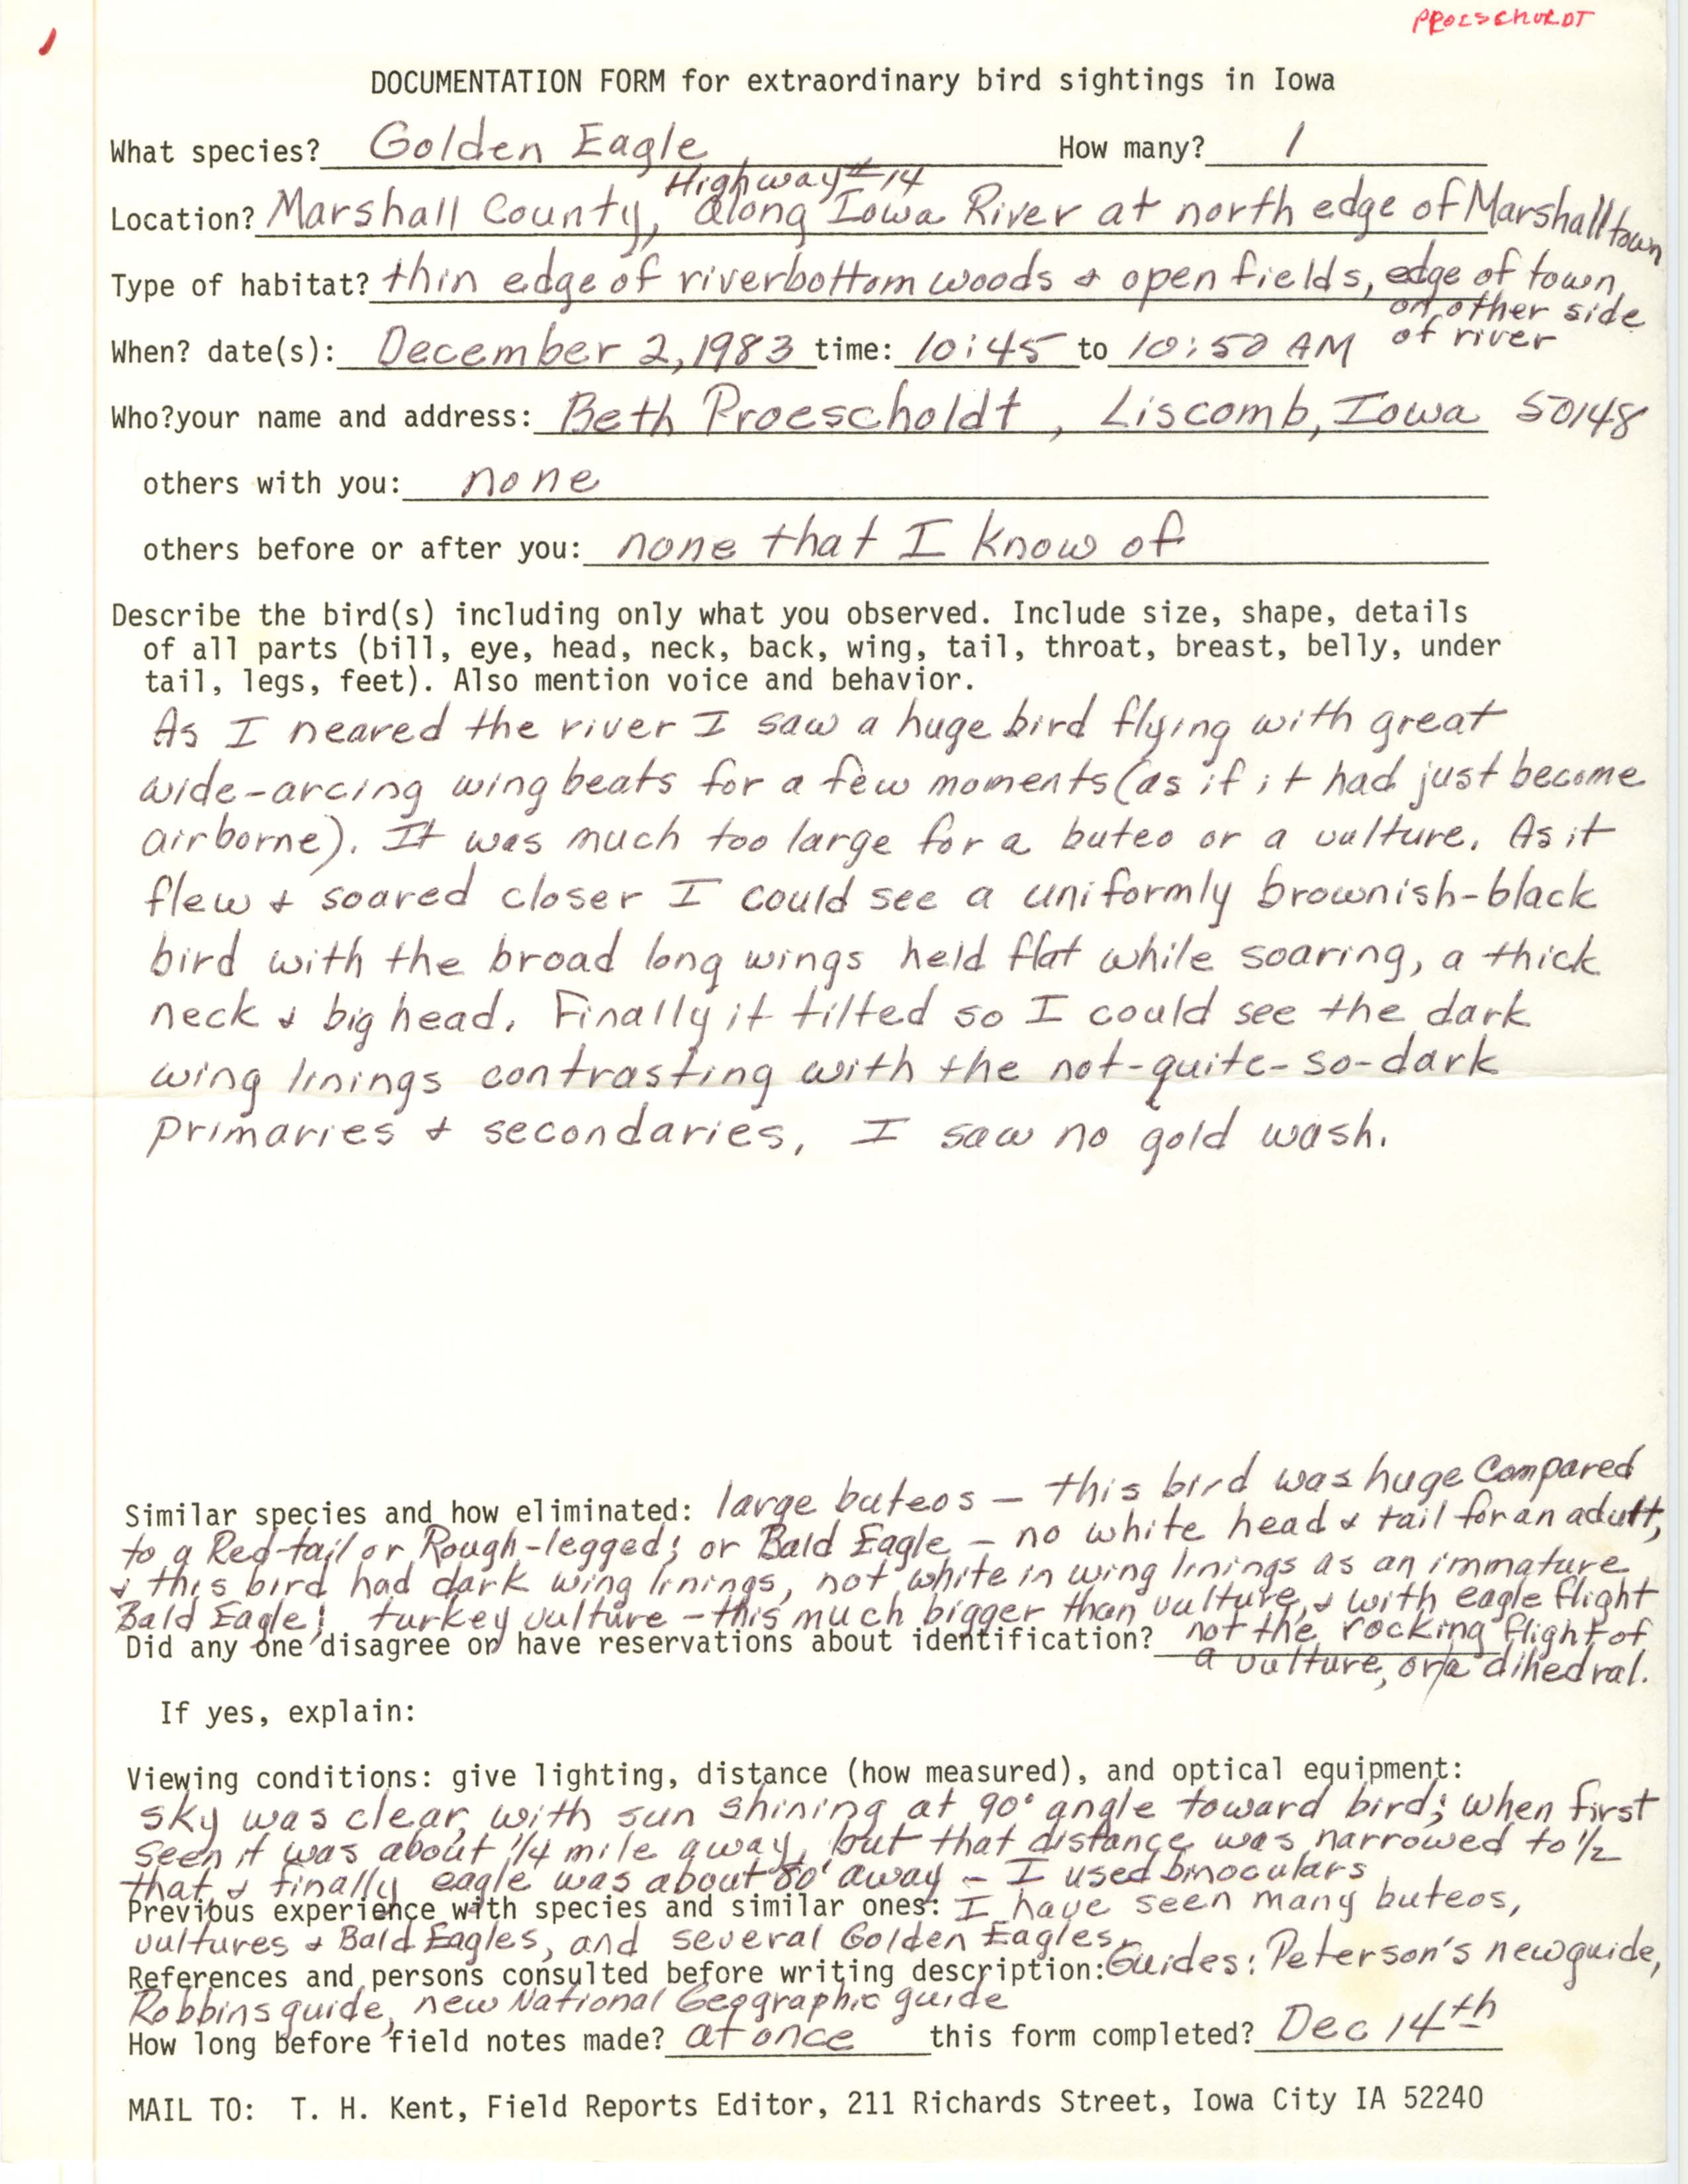 Rare bird documentation form for Golden Eagle at Marshalltown, 1983